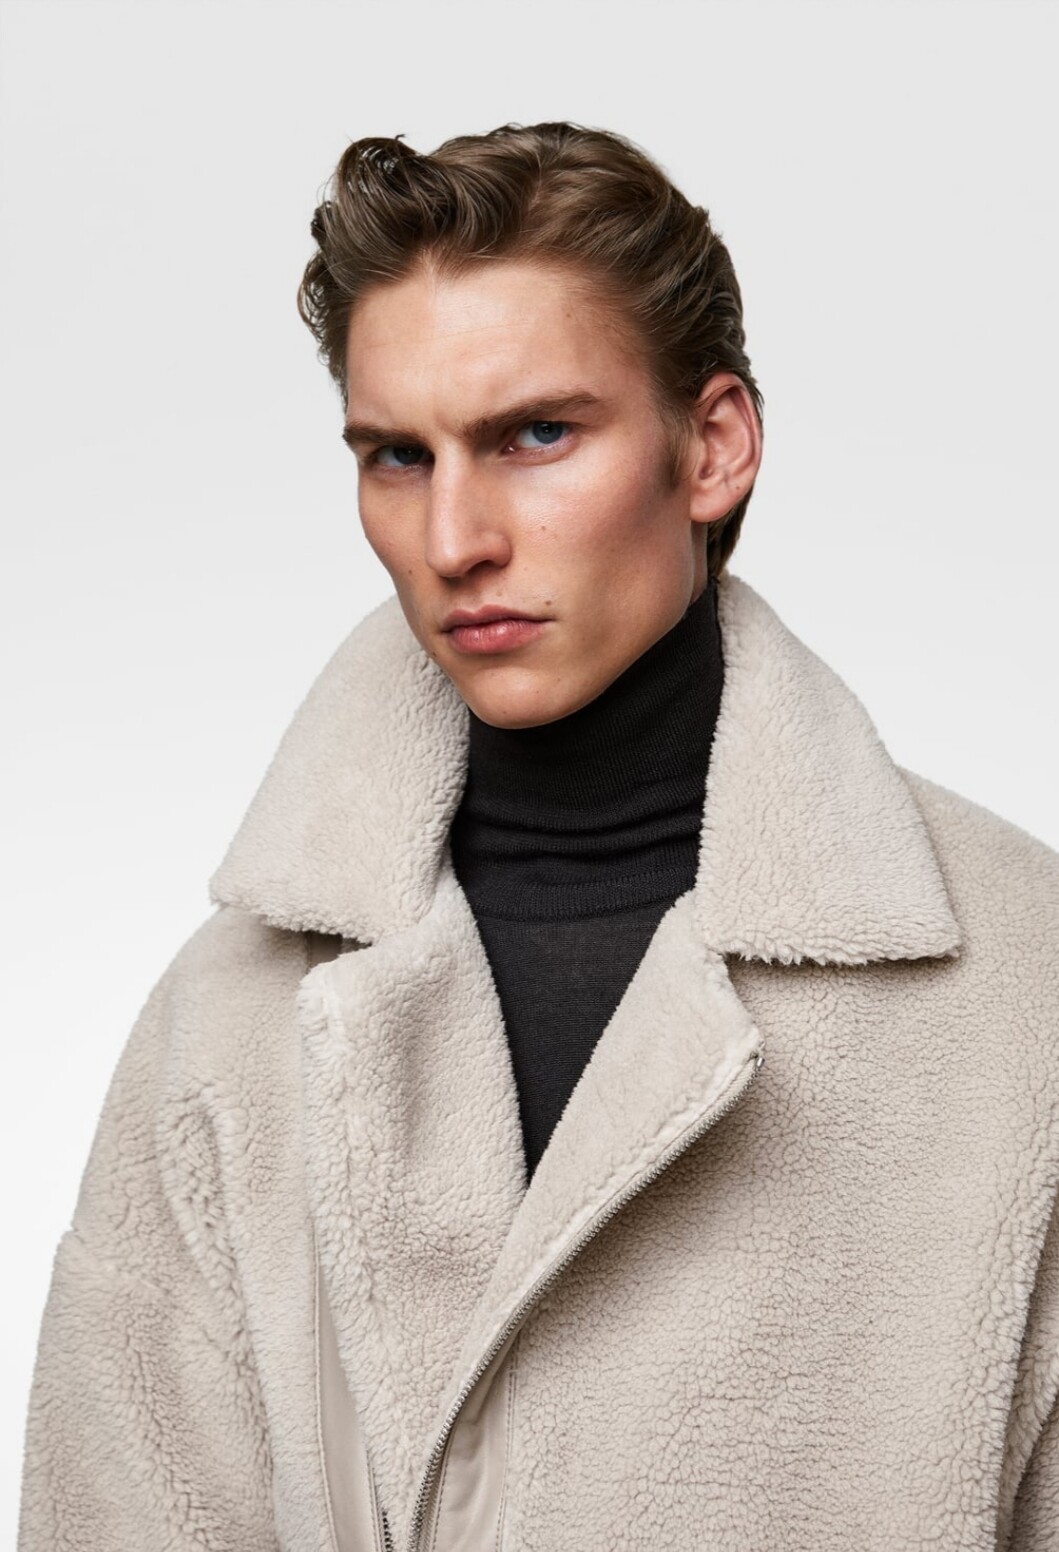 Zara male model, whats his name? - Male Model ID - Bellazon